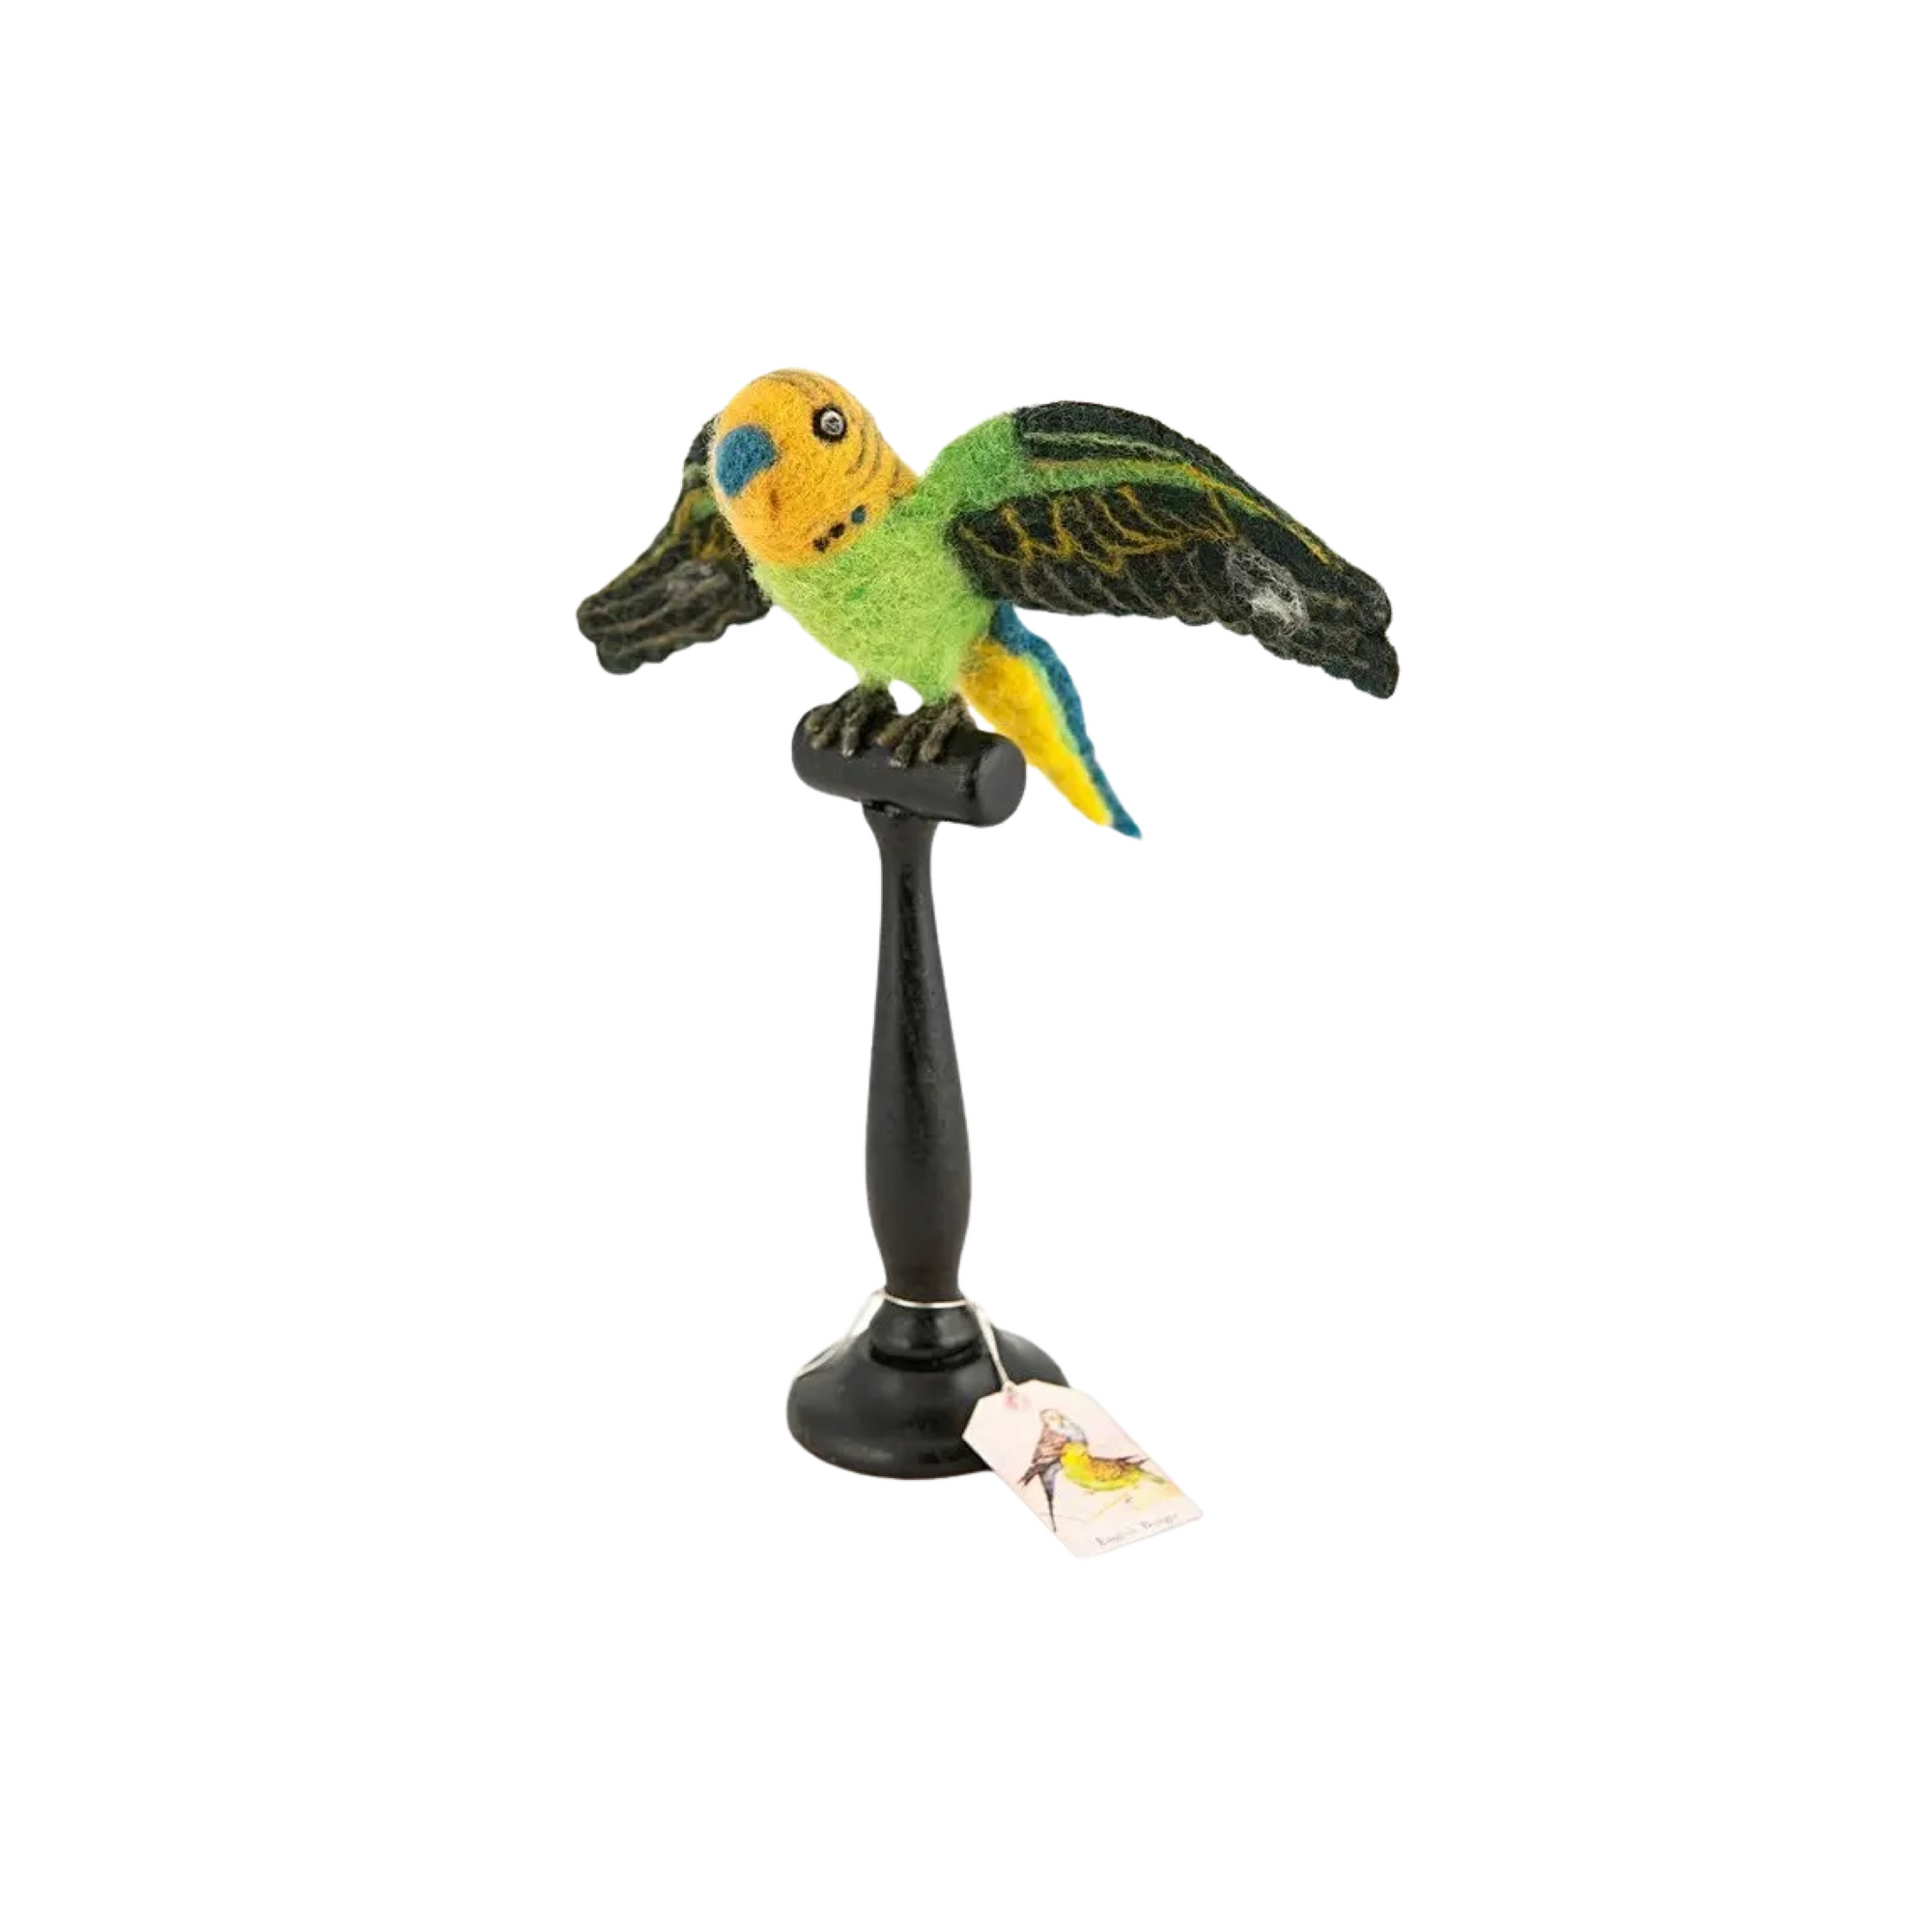 Felted Green English Budgie Bird Miniature